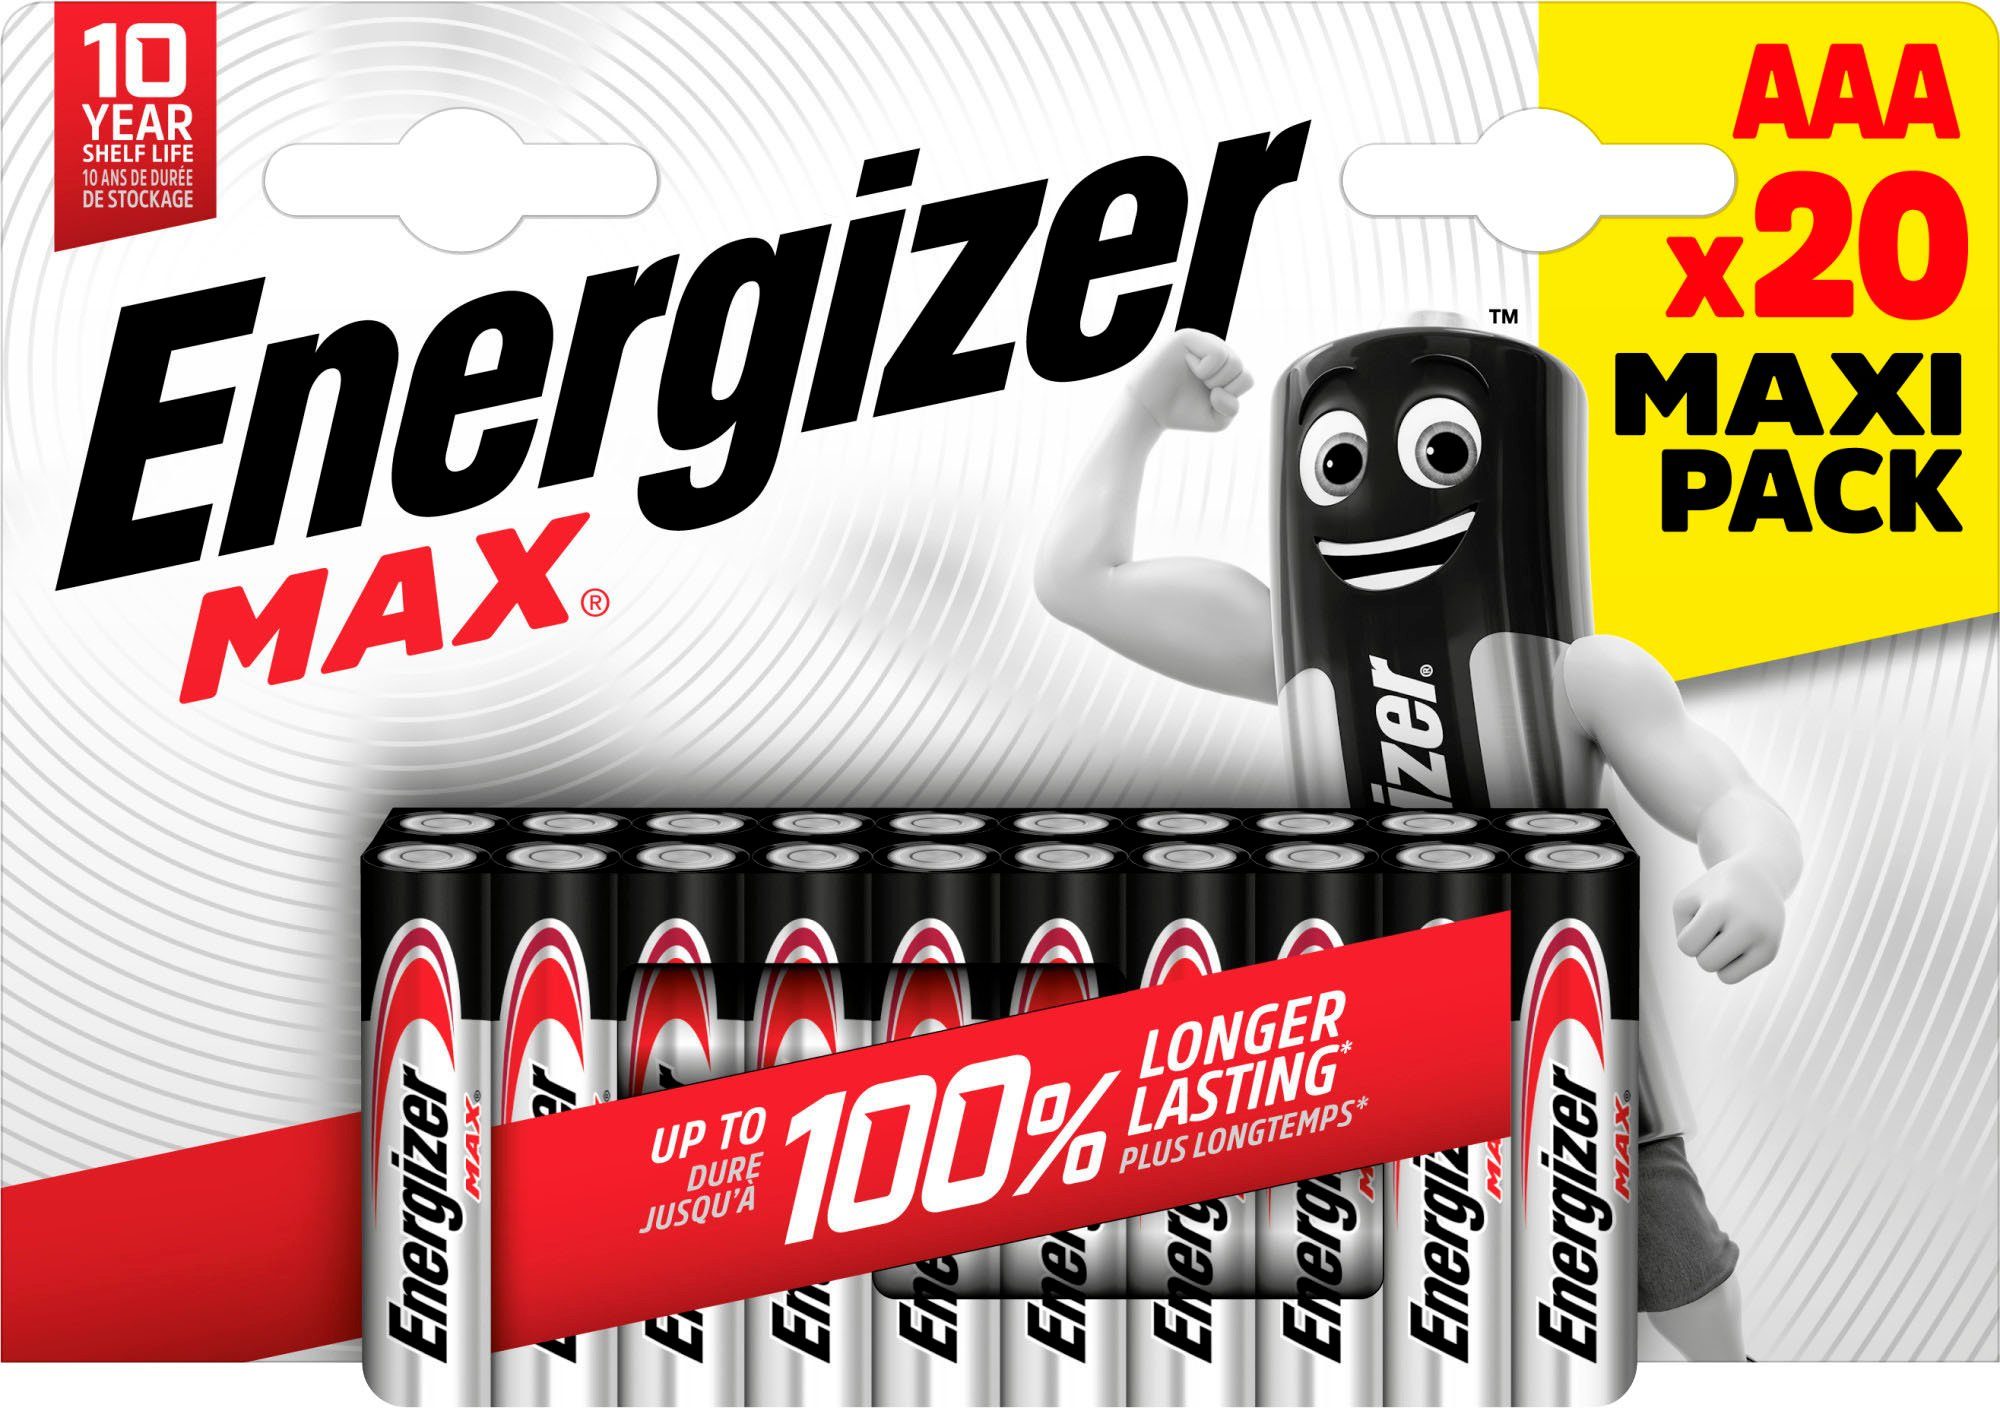 Energizer Batterie, AAA Pack (20 MAX St) 20er